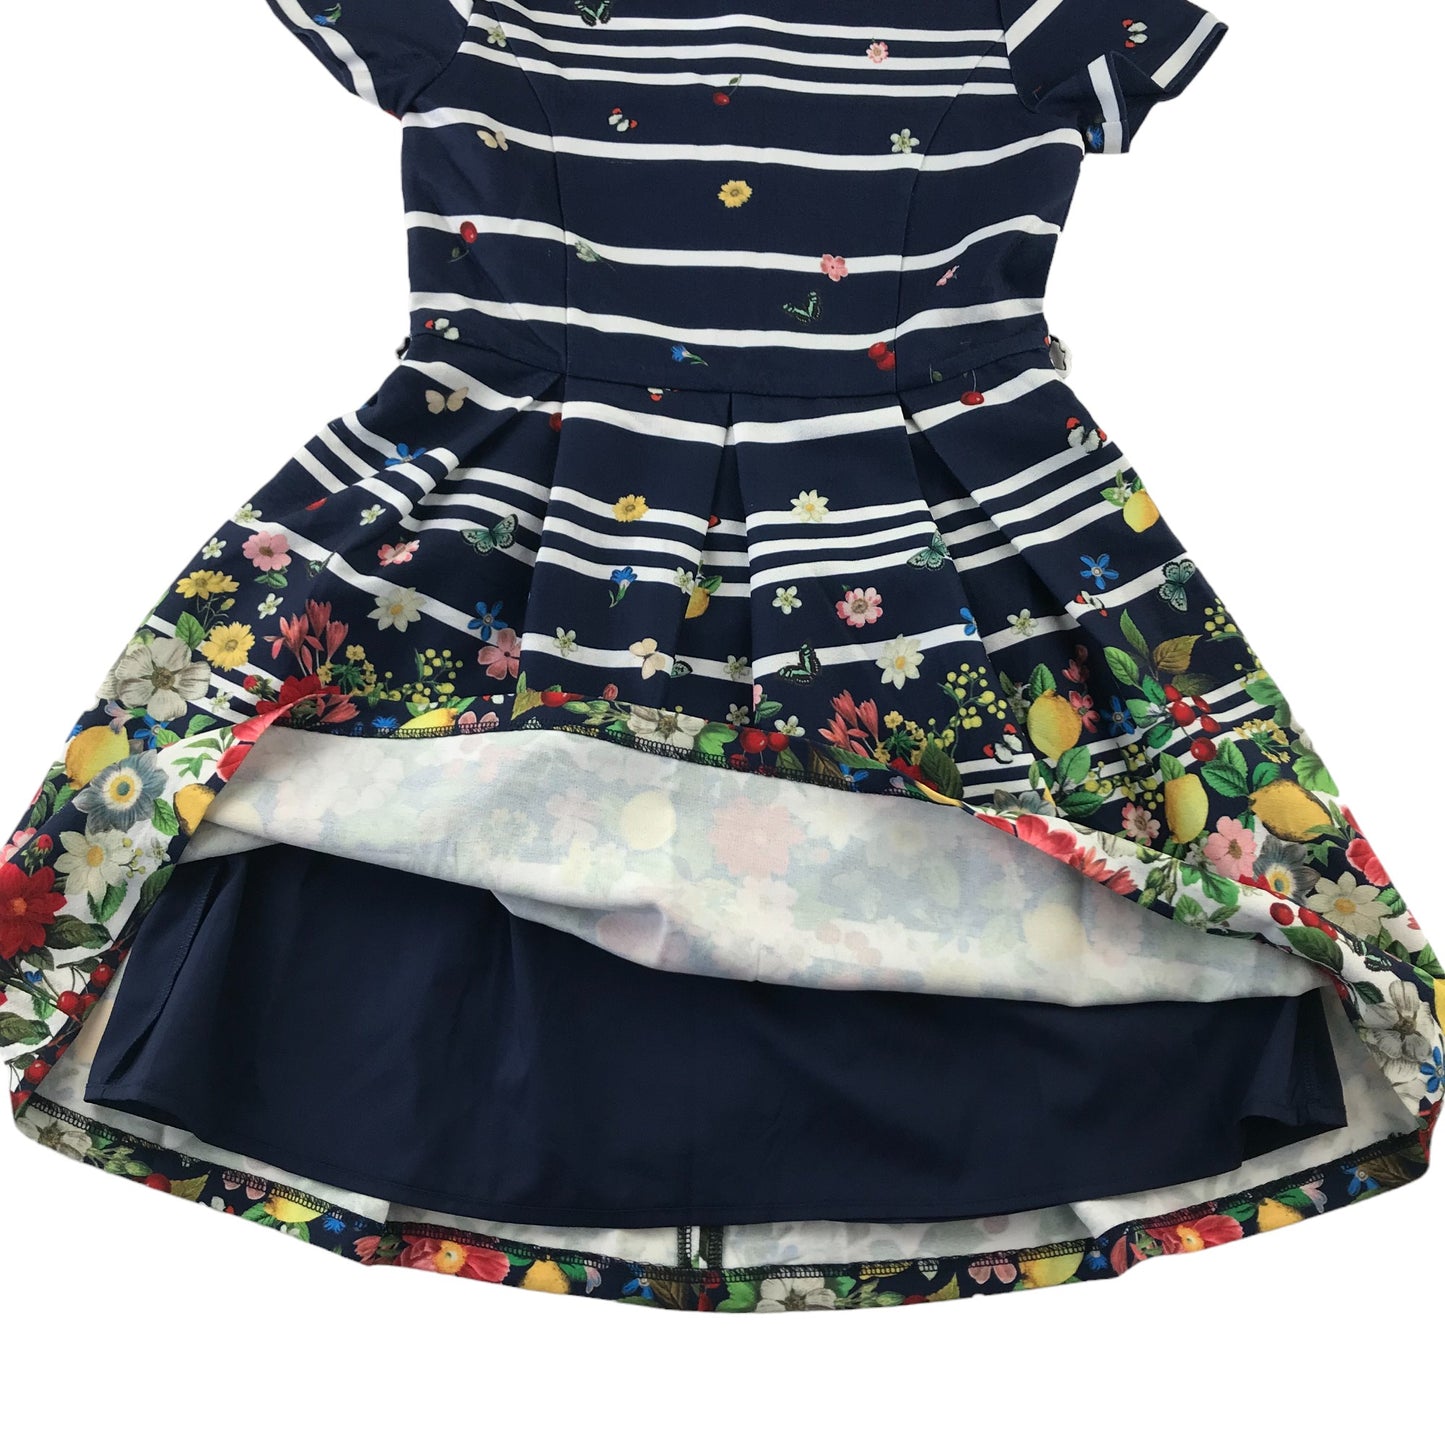 Yumi dress 11-12 years navy blue stripy floral print summery